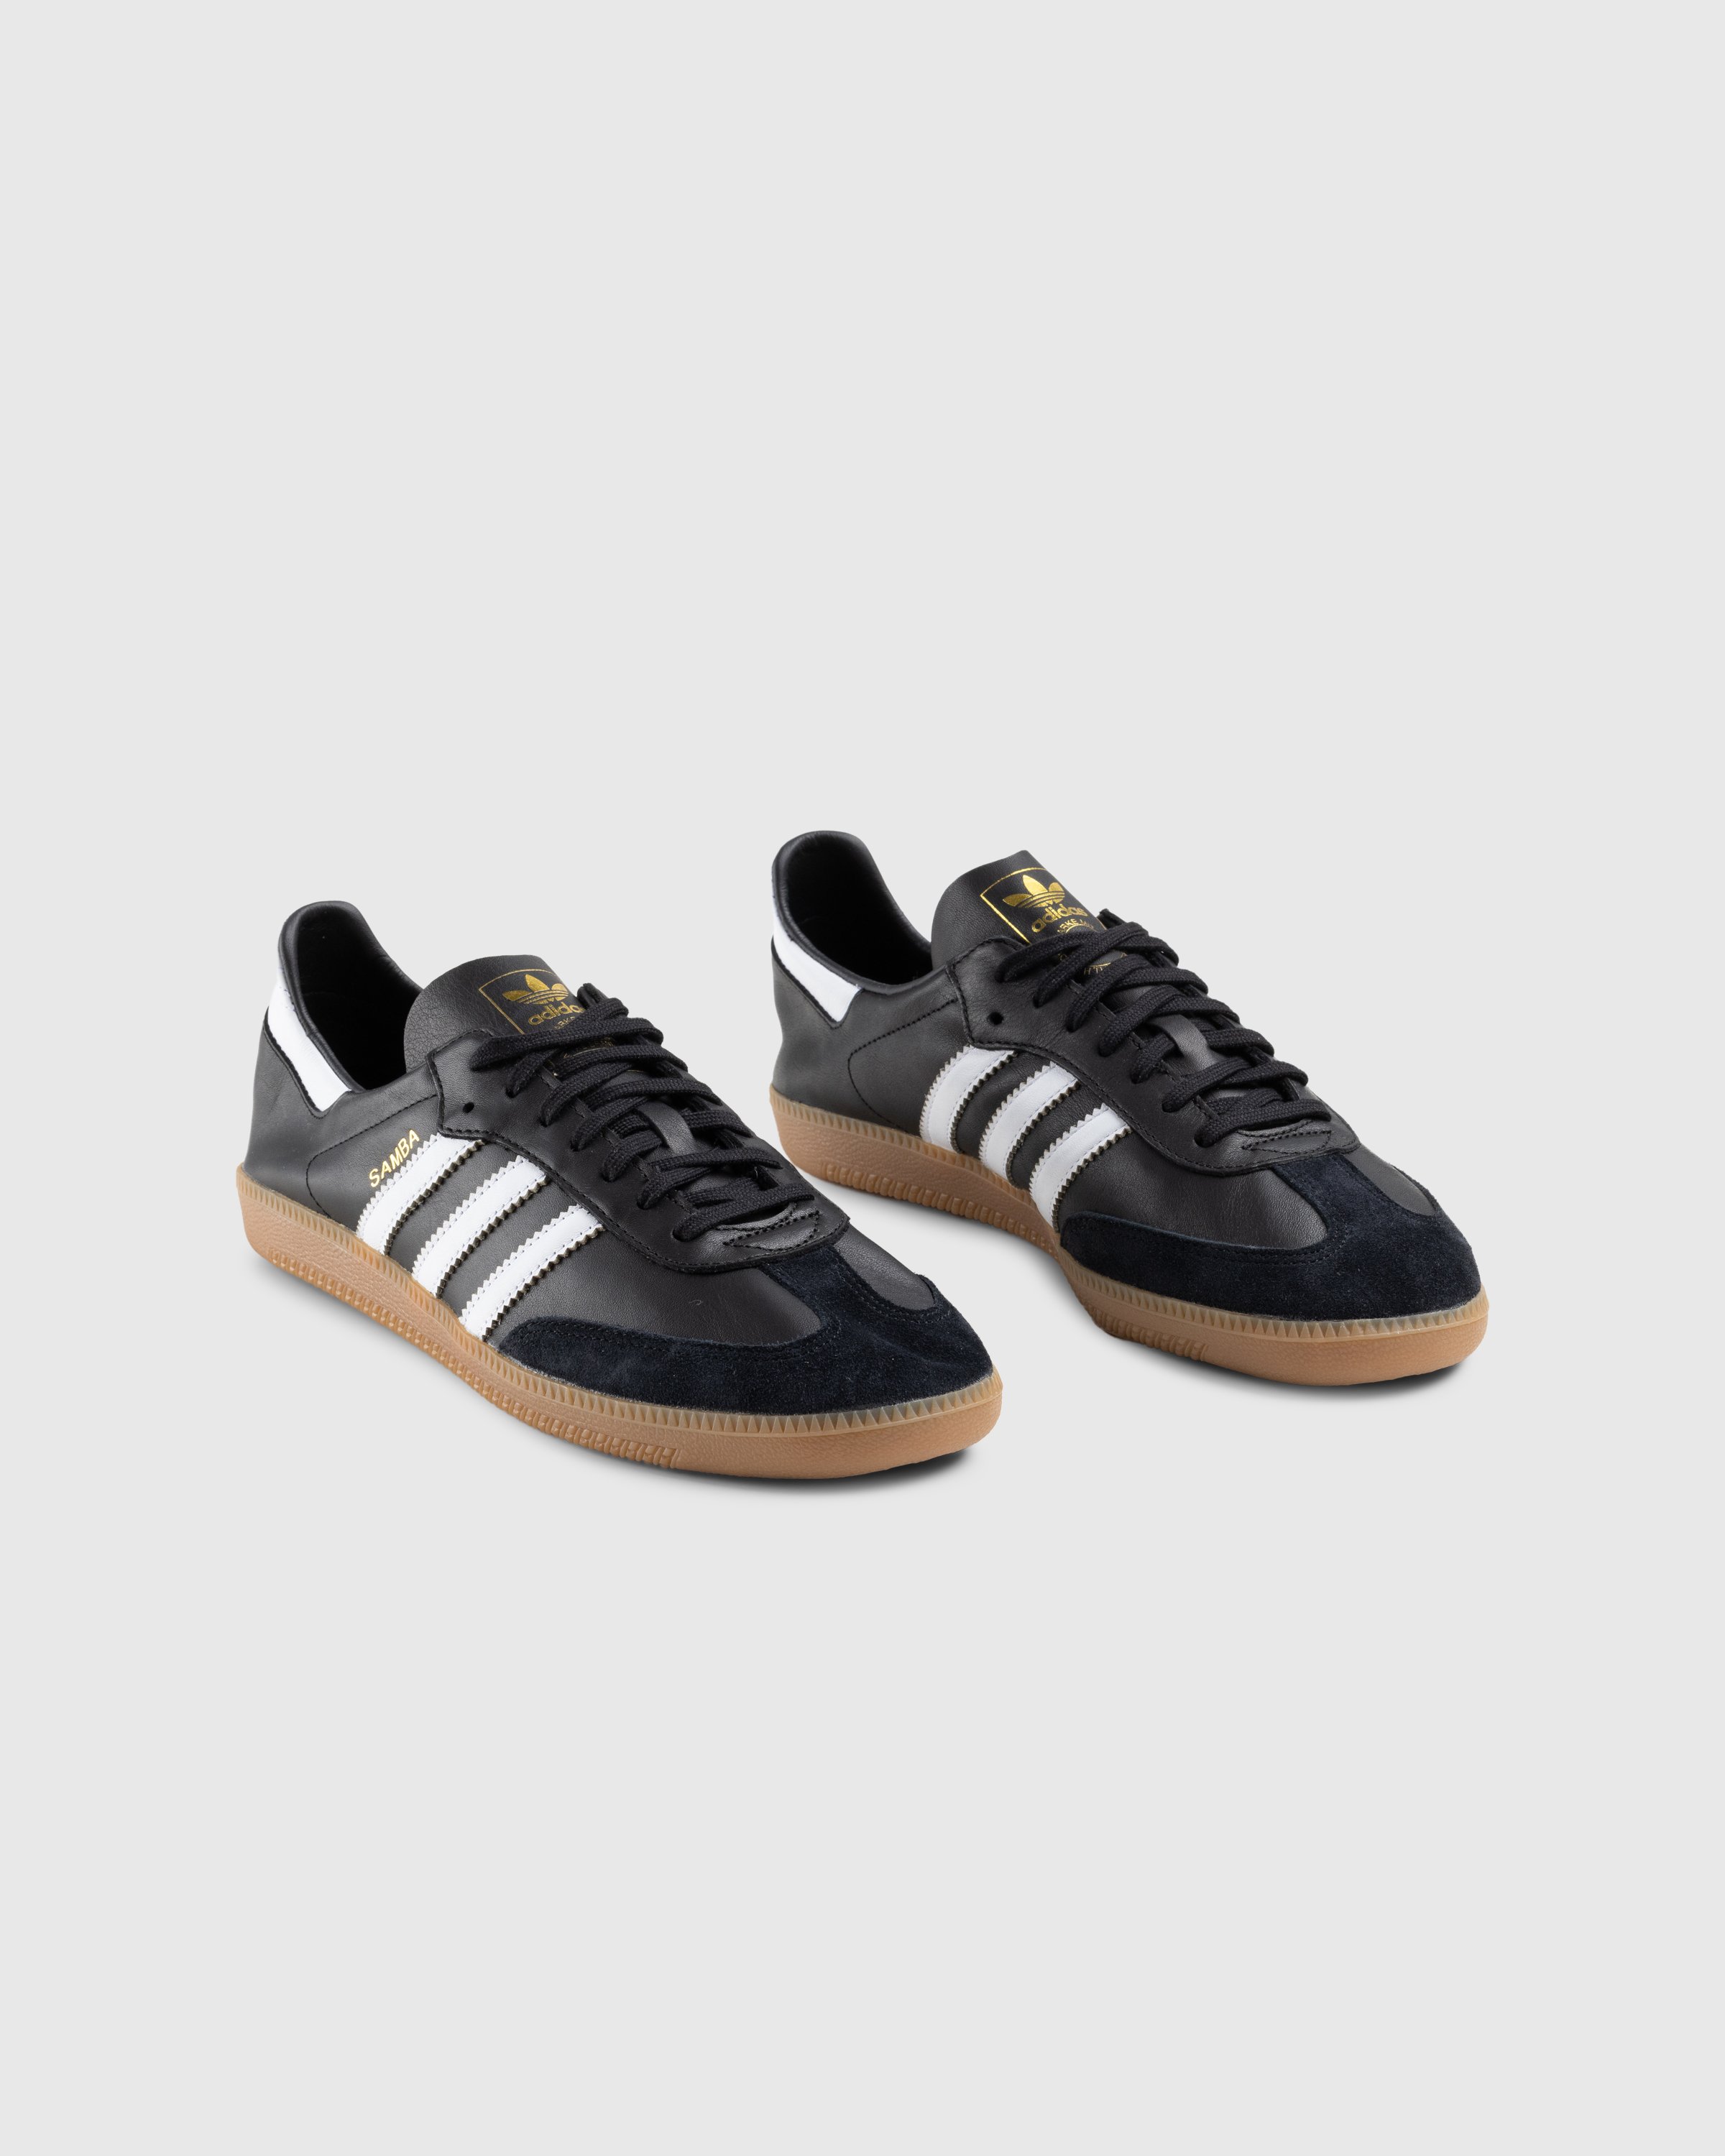 Adidas - Samba Decon Black - Footwear - Black - Image 3